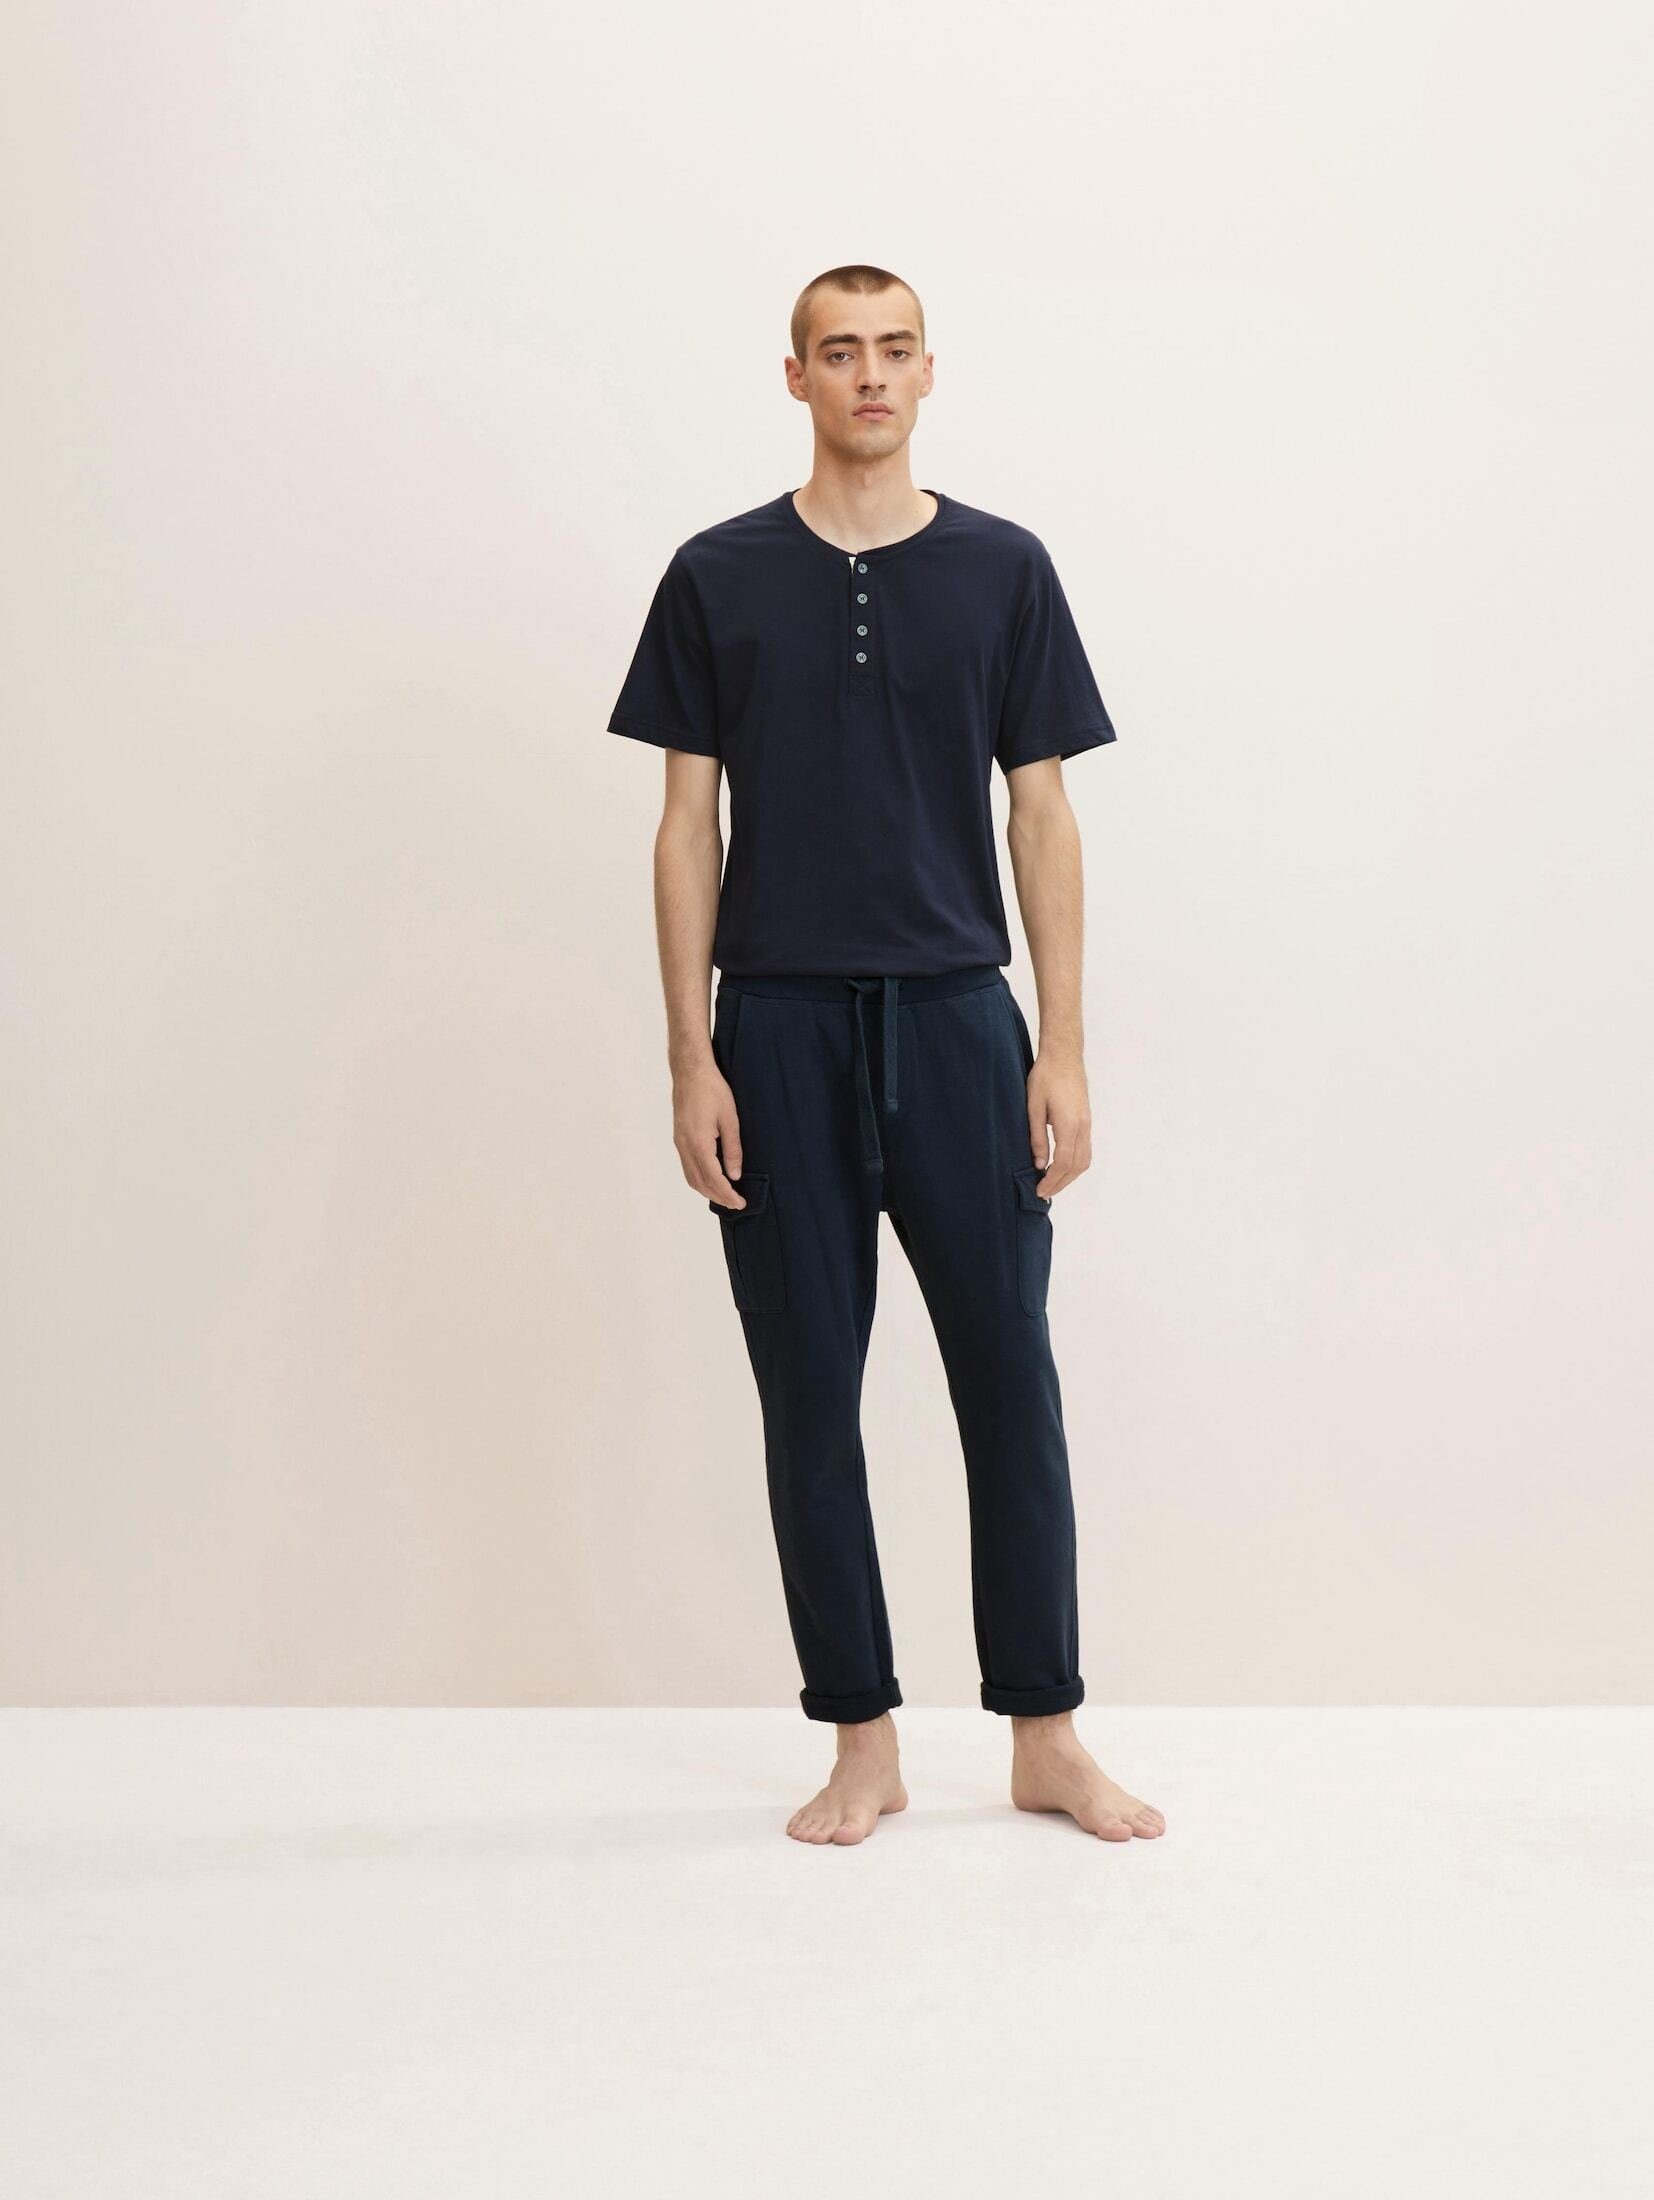 TOM blau-dunkel-uni Pyjama T-Shirt TAILOR Pyjamaoberteil